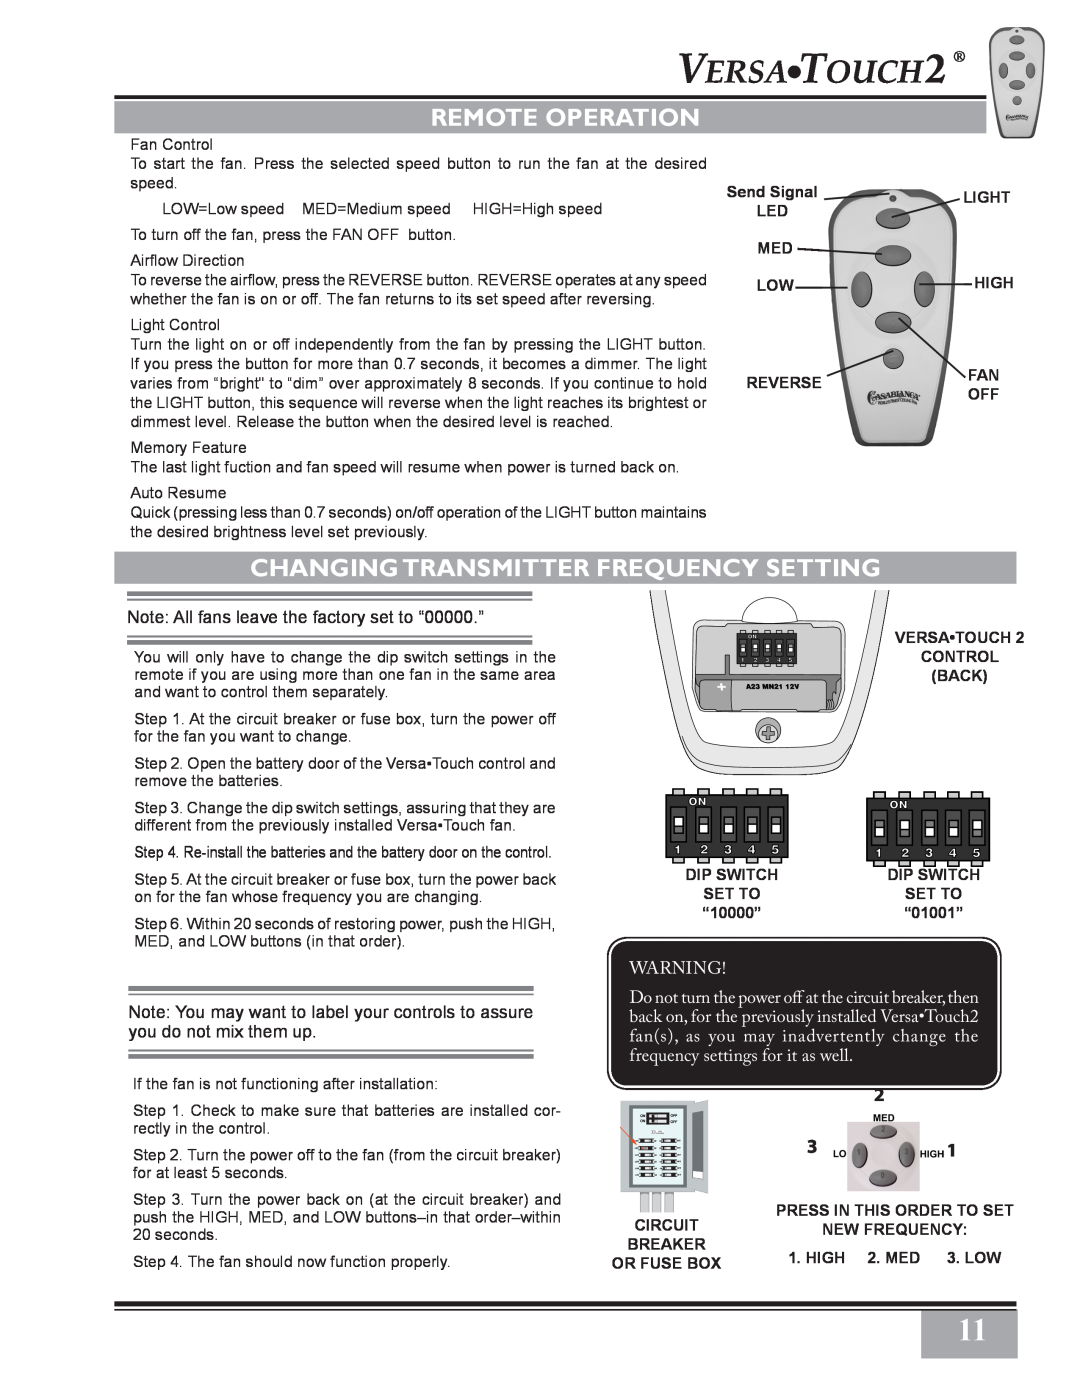 Casablanca Fan Company C28GXXM warranty Remote Operation, Changingtransmitter Frequency Setting 